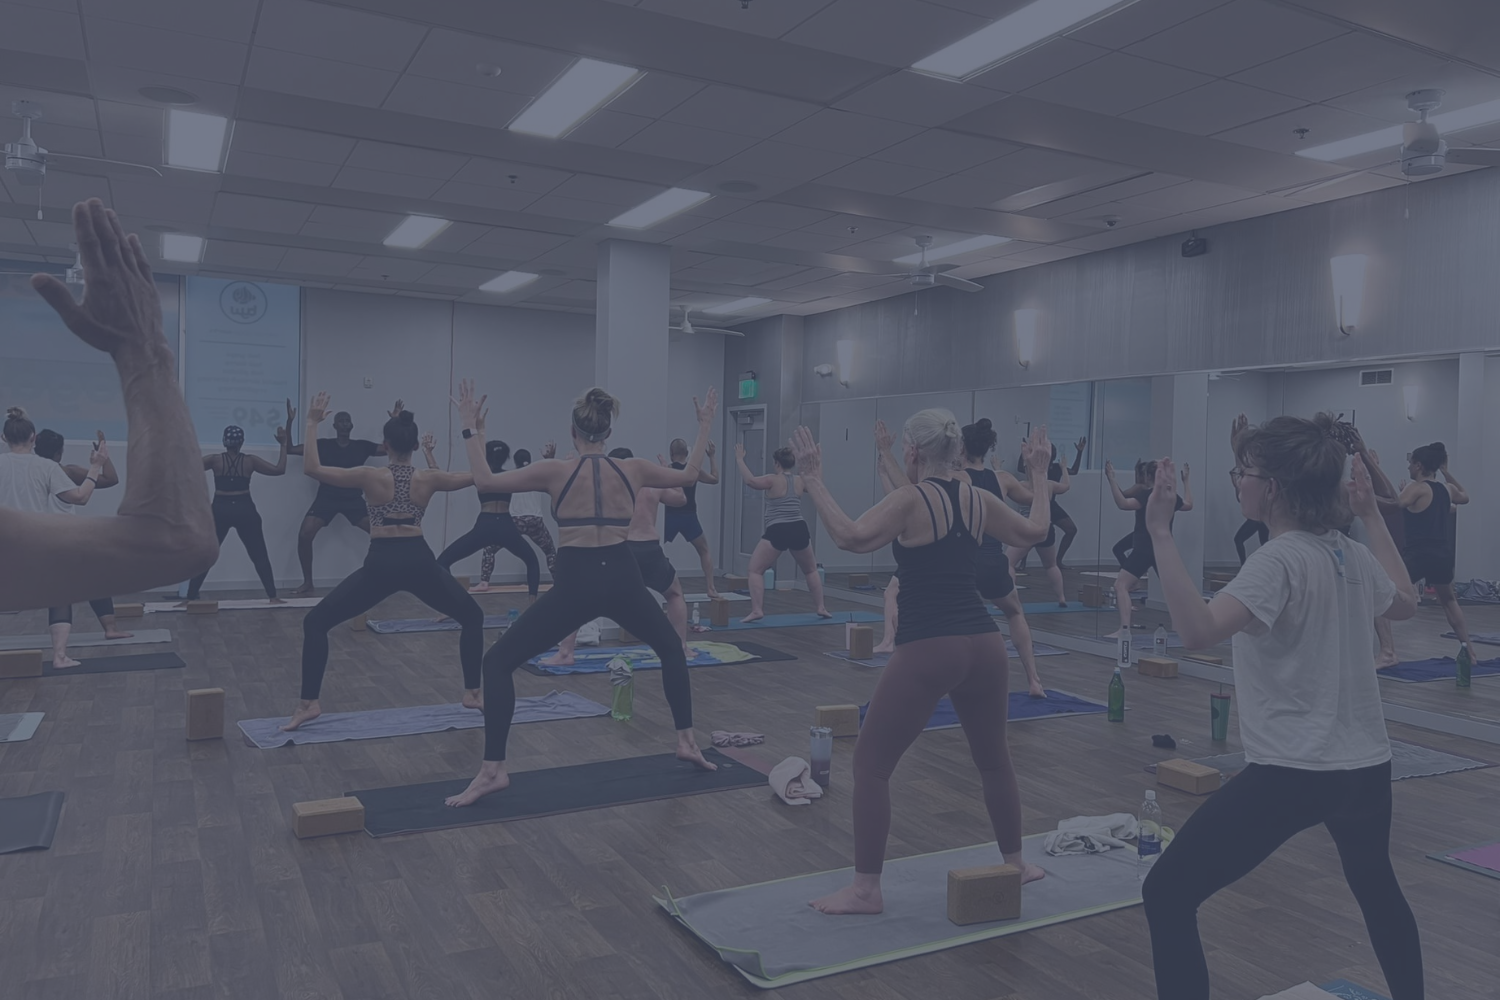 Bikram Yoga Works - Ivy City: Read Reviews and Book Classes on ClassPass